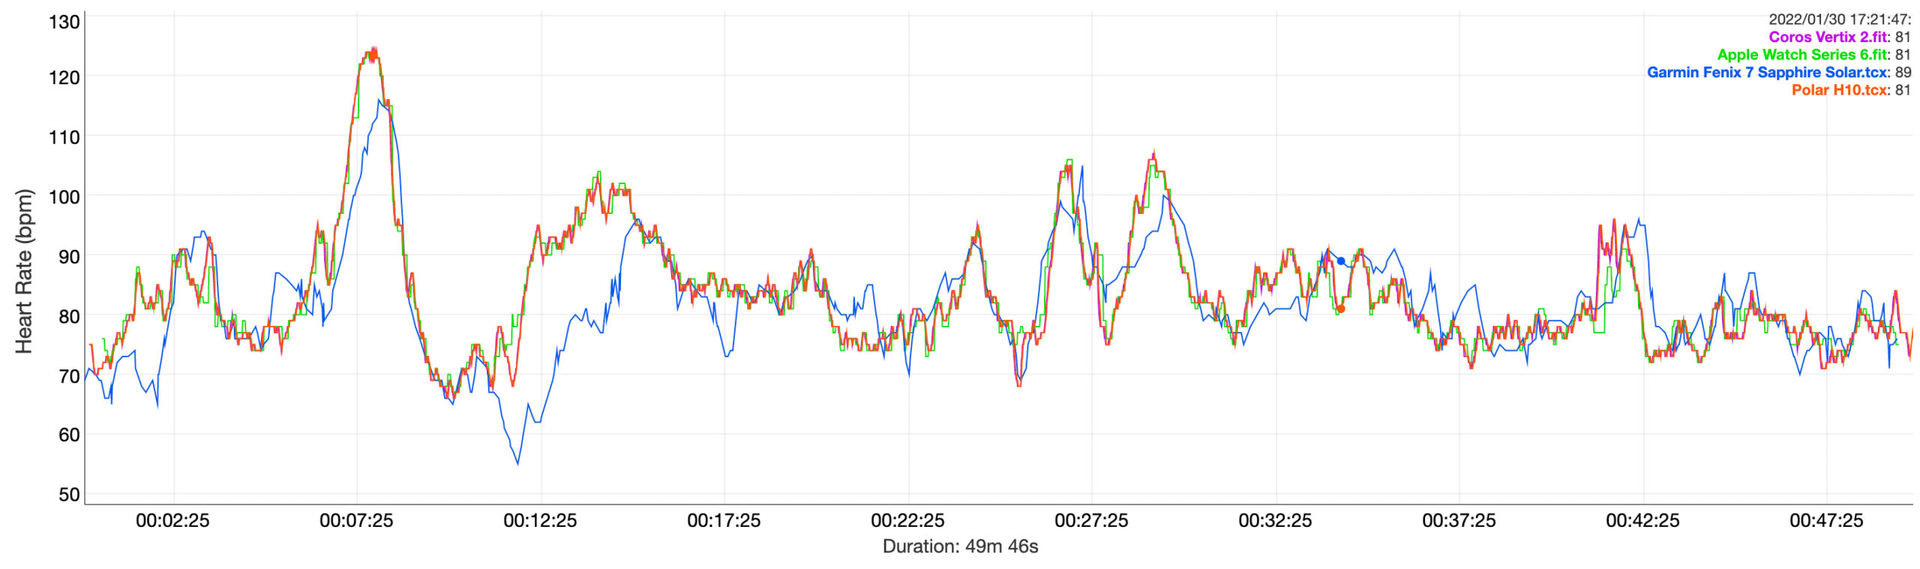 Garmin Fenix 7 vs Polar H10 vs Apple Watch Series 6 vs Coros Vertix 2 heart rate data outdoor run